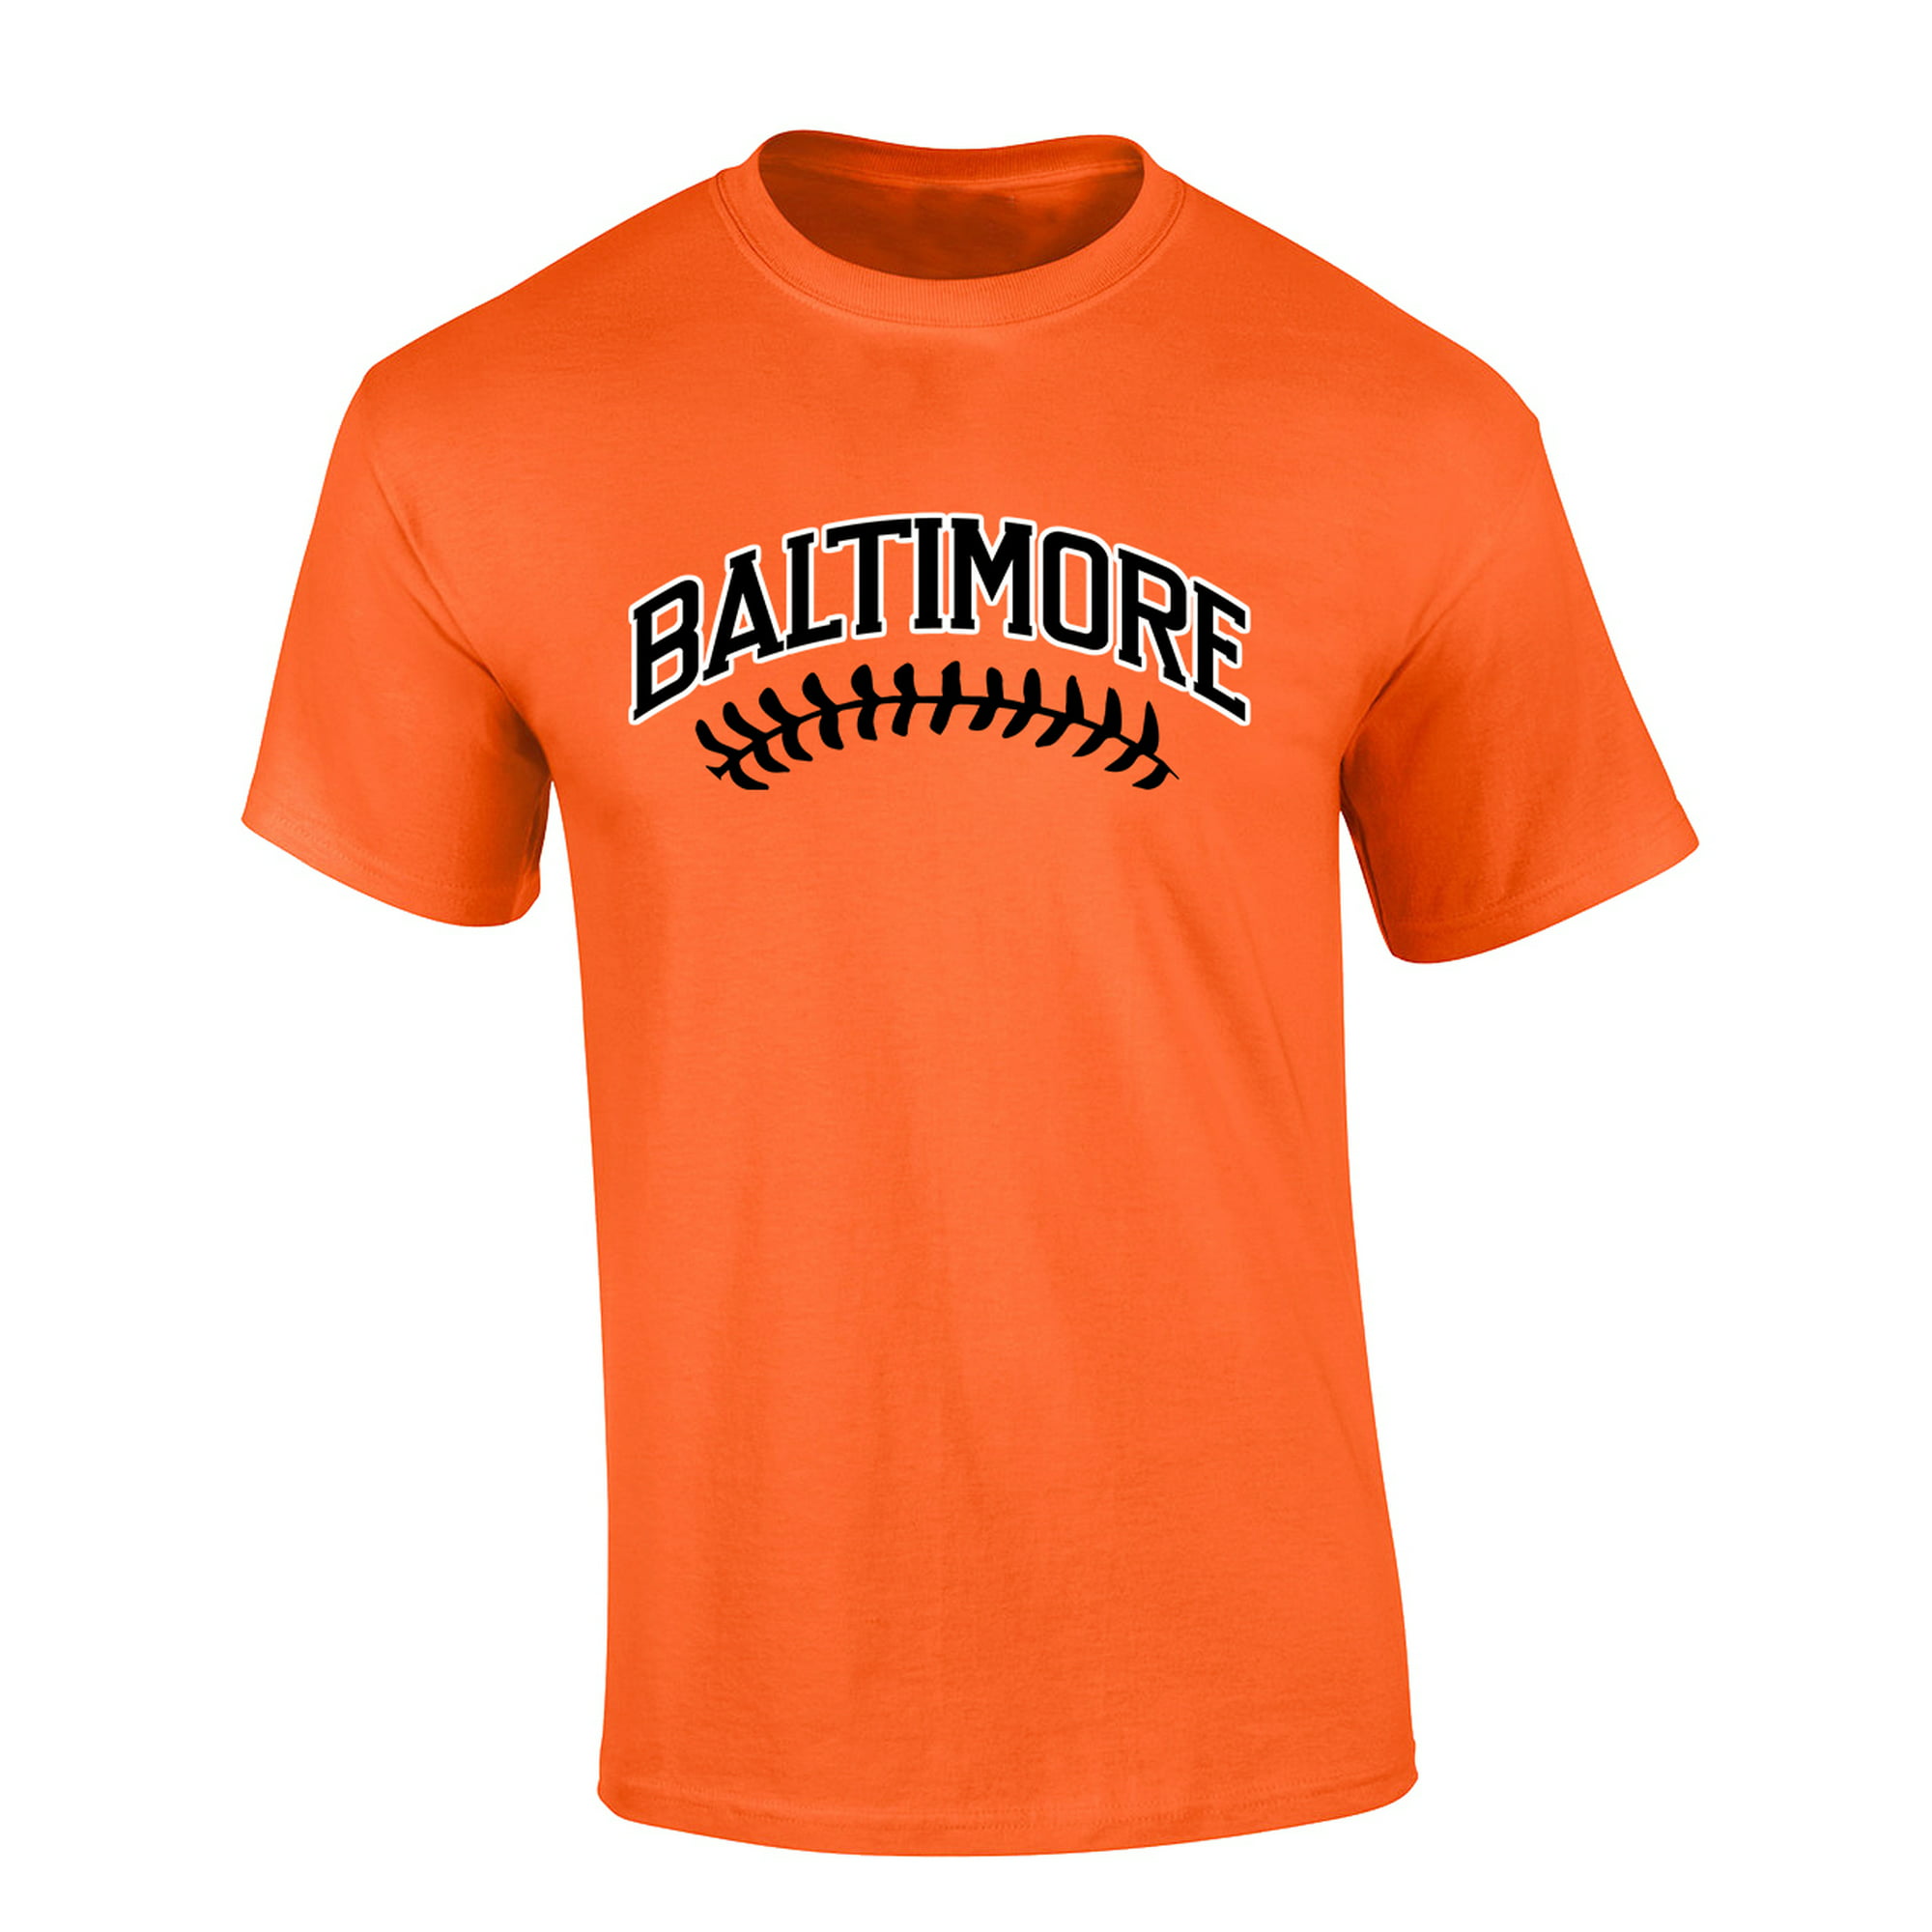 Trenz Shirt Company Mens Baseball Team Tshirt Maryland Baltimore Baseball Team Color Black and Orange Laces Short Sleeve T-Shirt Graphic Tee-Orange-Medium, Men's